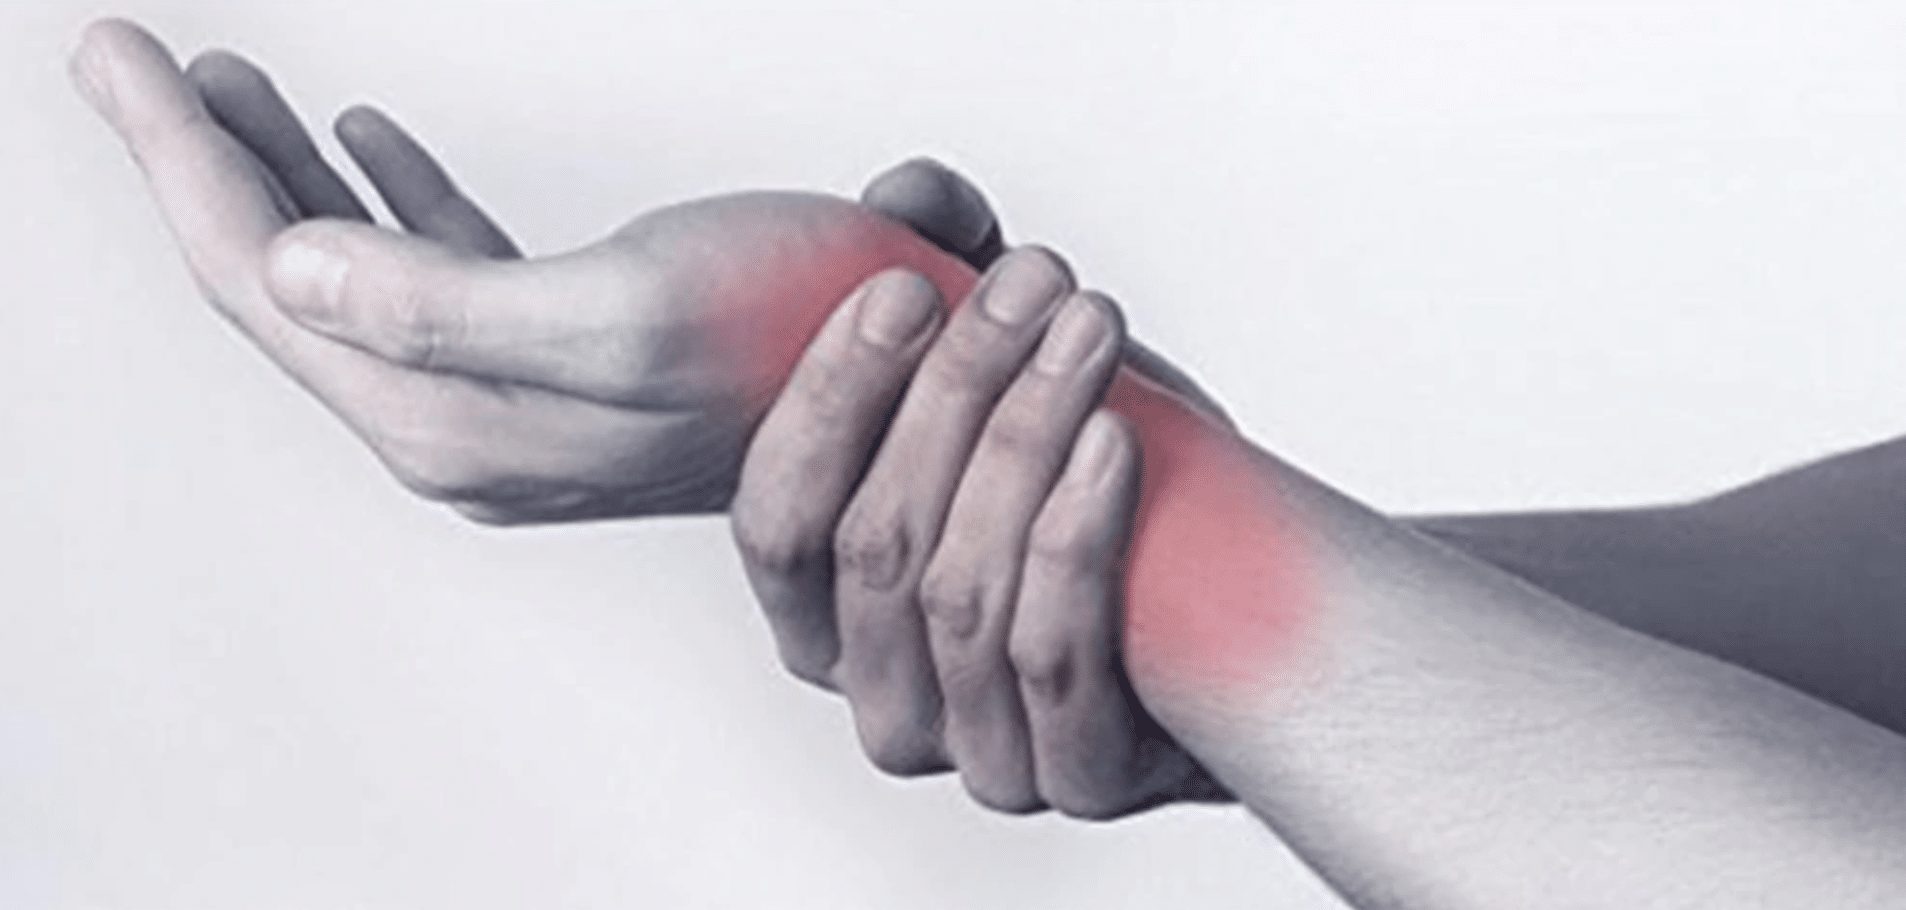 symptômes de l'arthrite ce qu'il faut faire contre l'arthrite